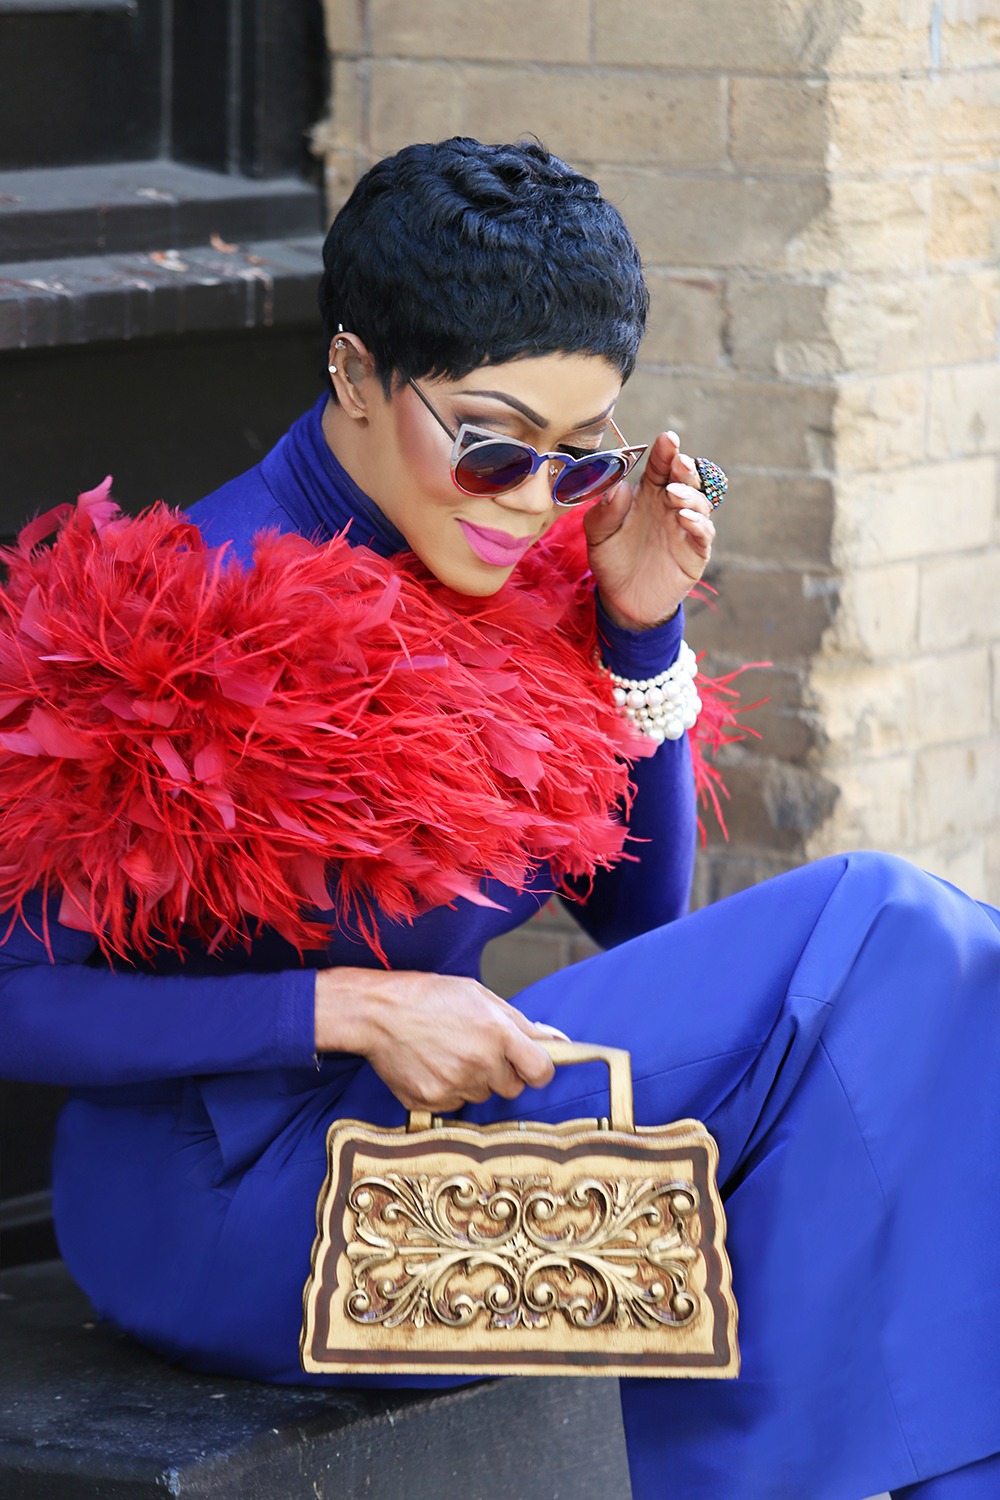 The Blues Never Felt So Good | Fashionably Idu